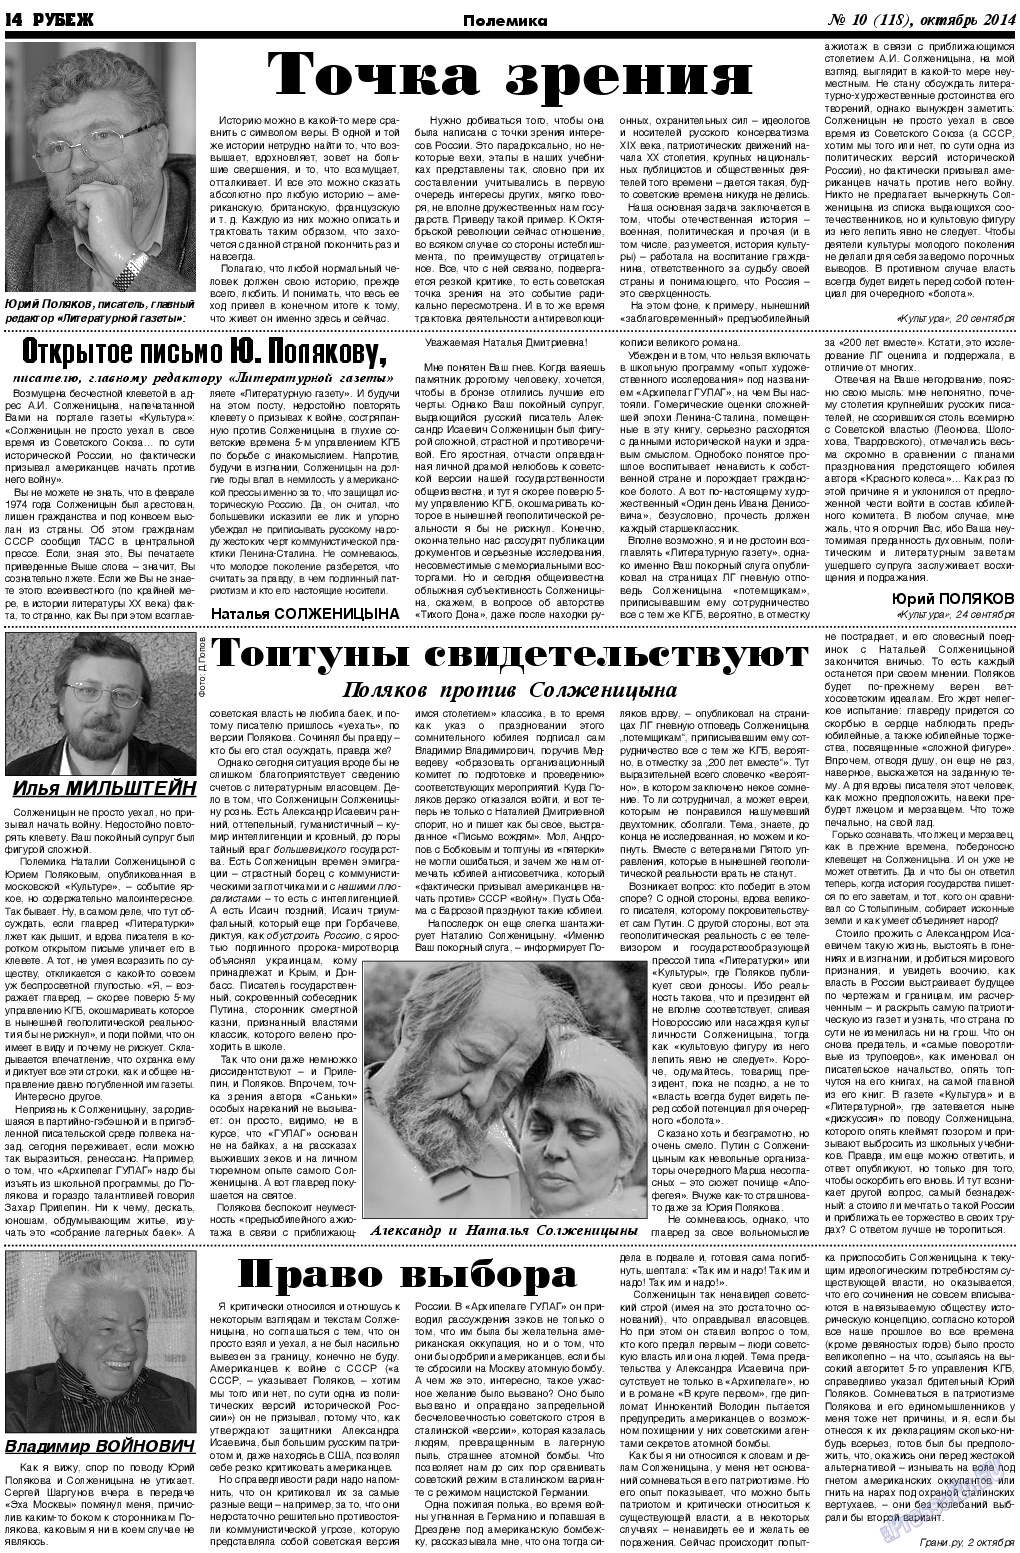 Рубеж, газета. 2014 №10 стр.14